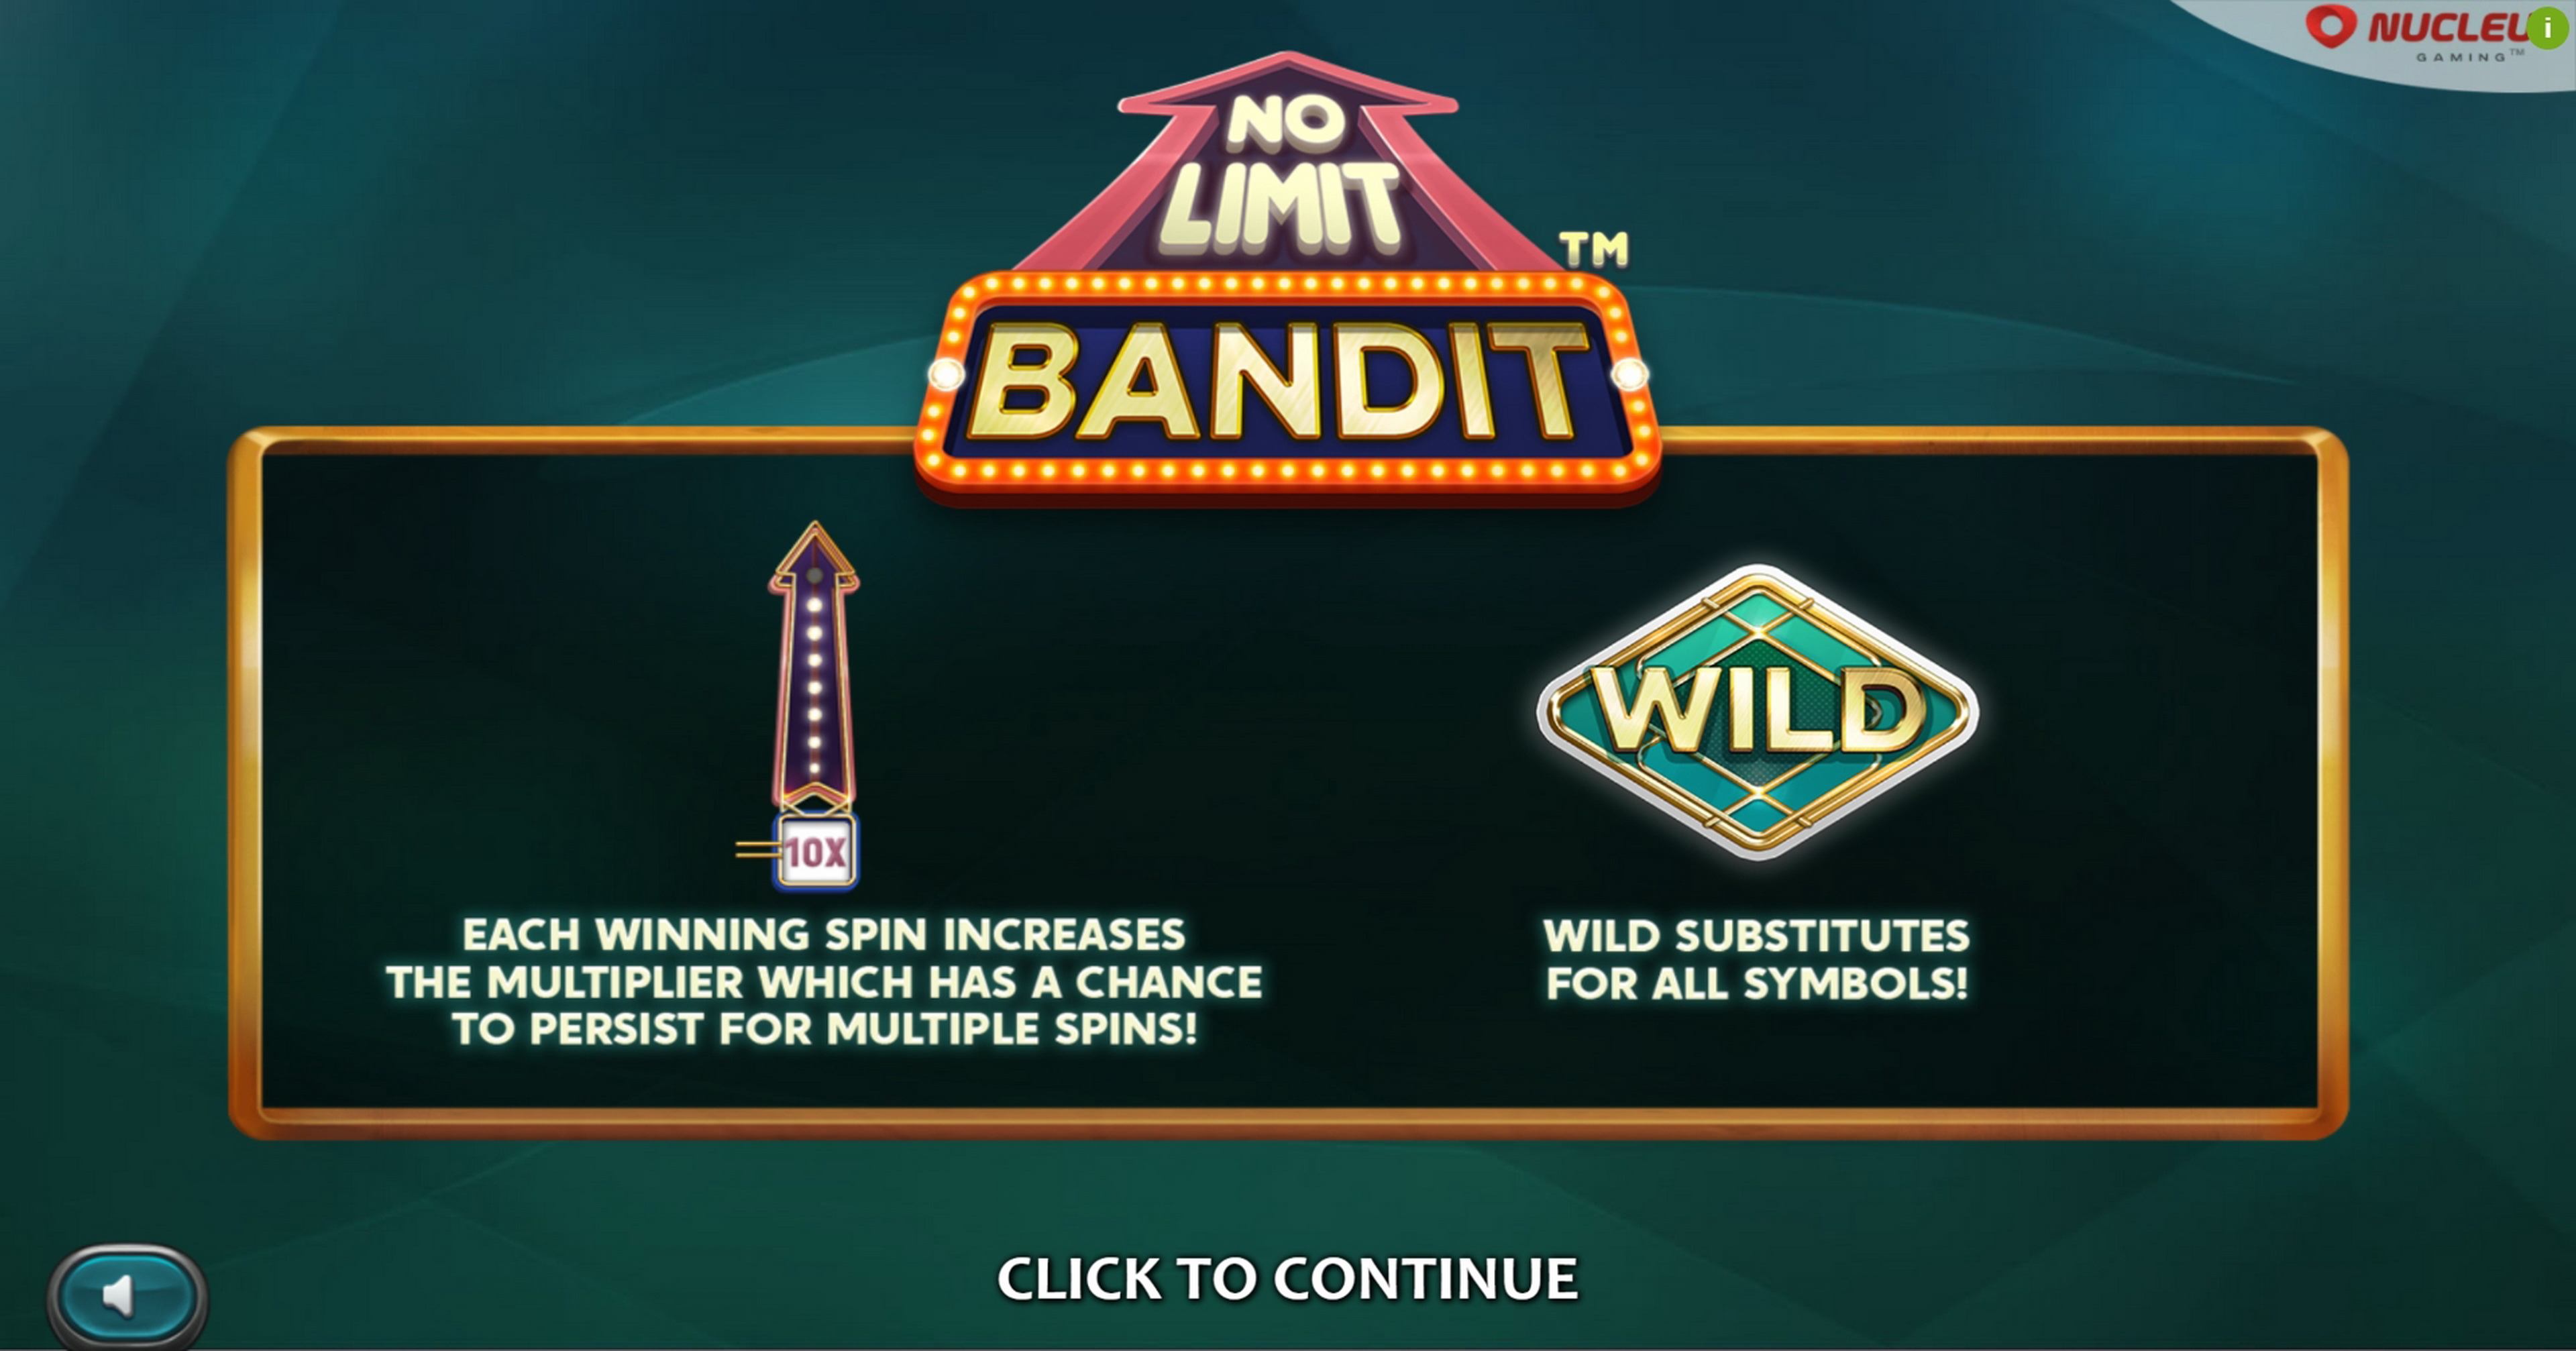 No Limit Bandit demo